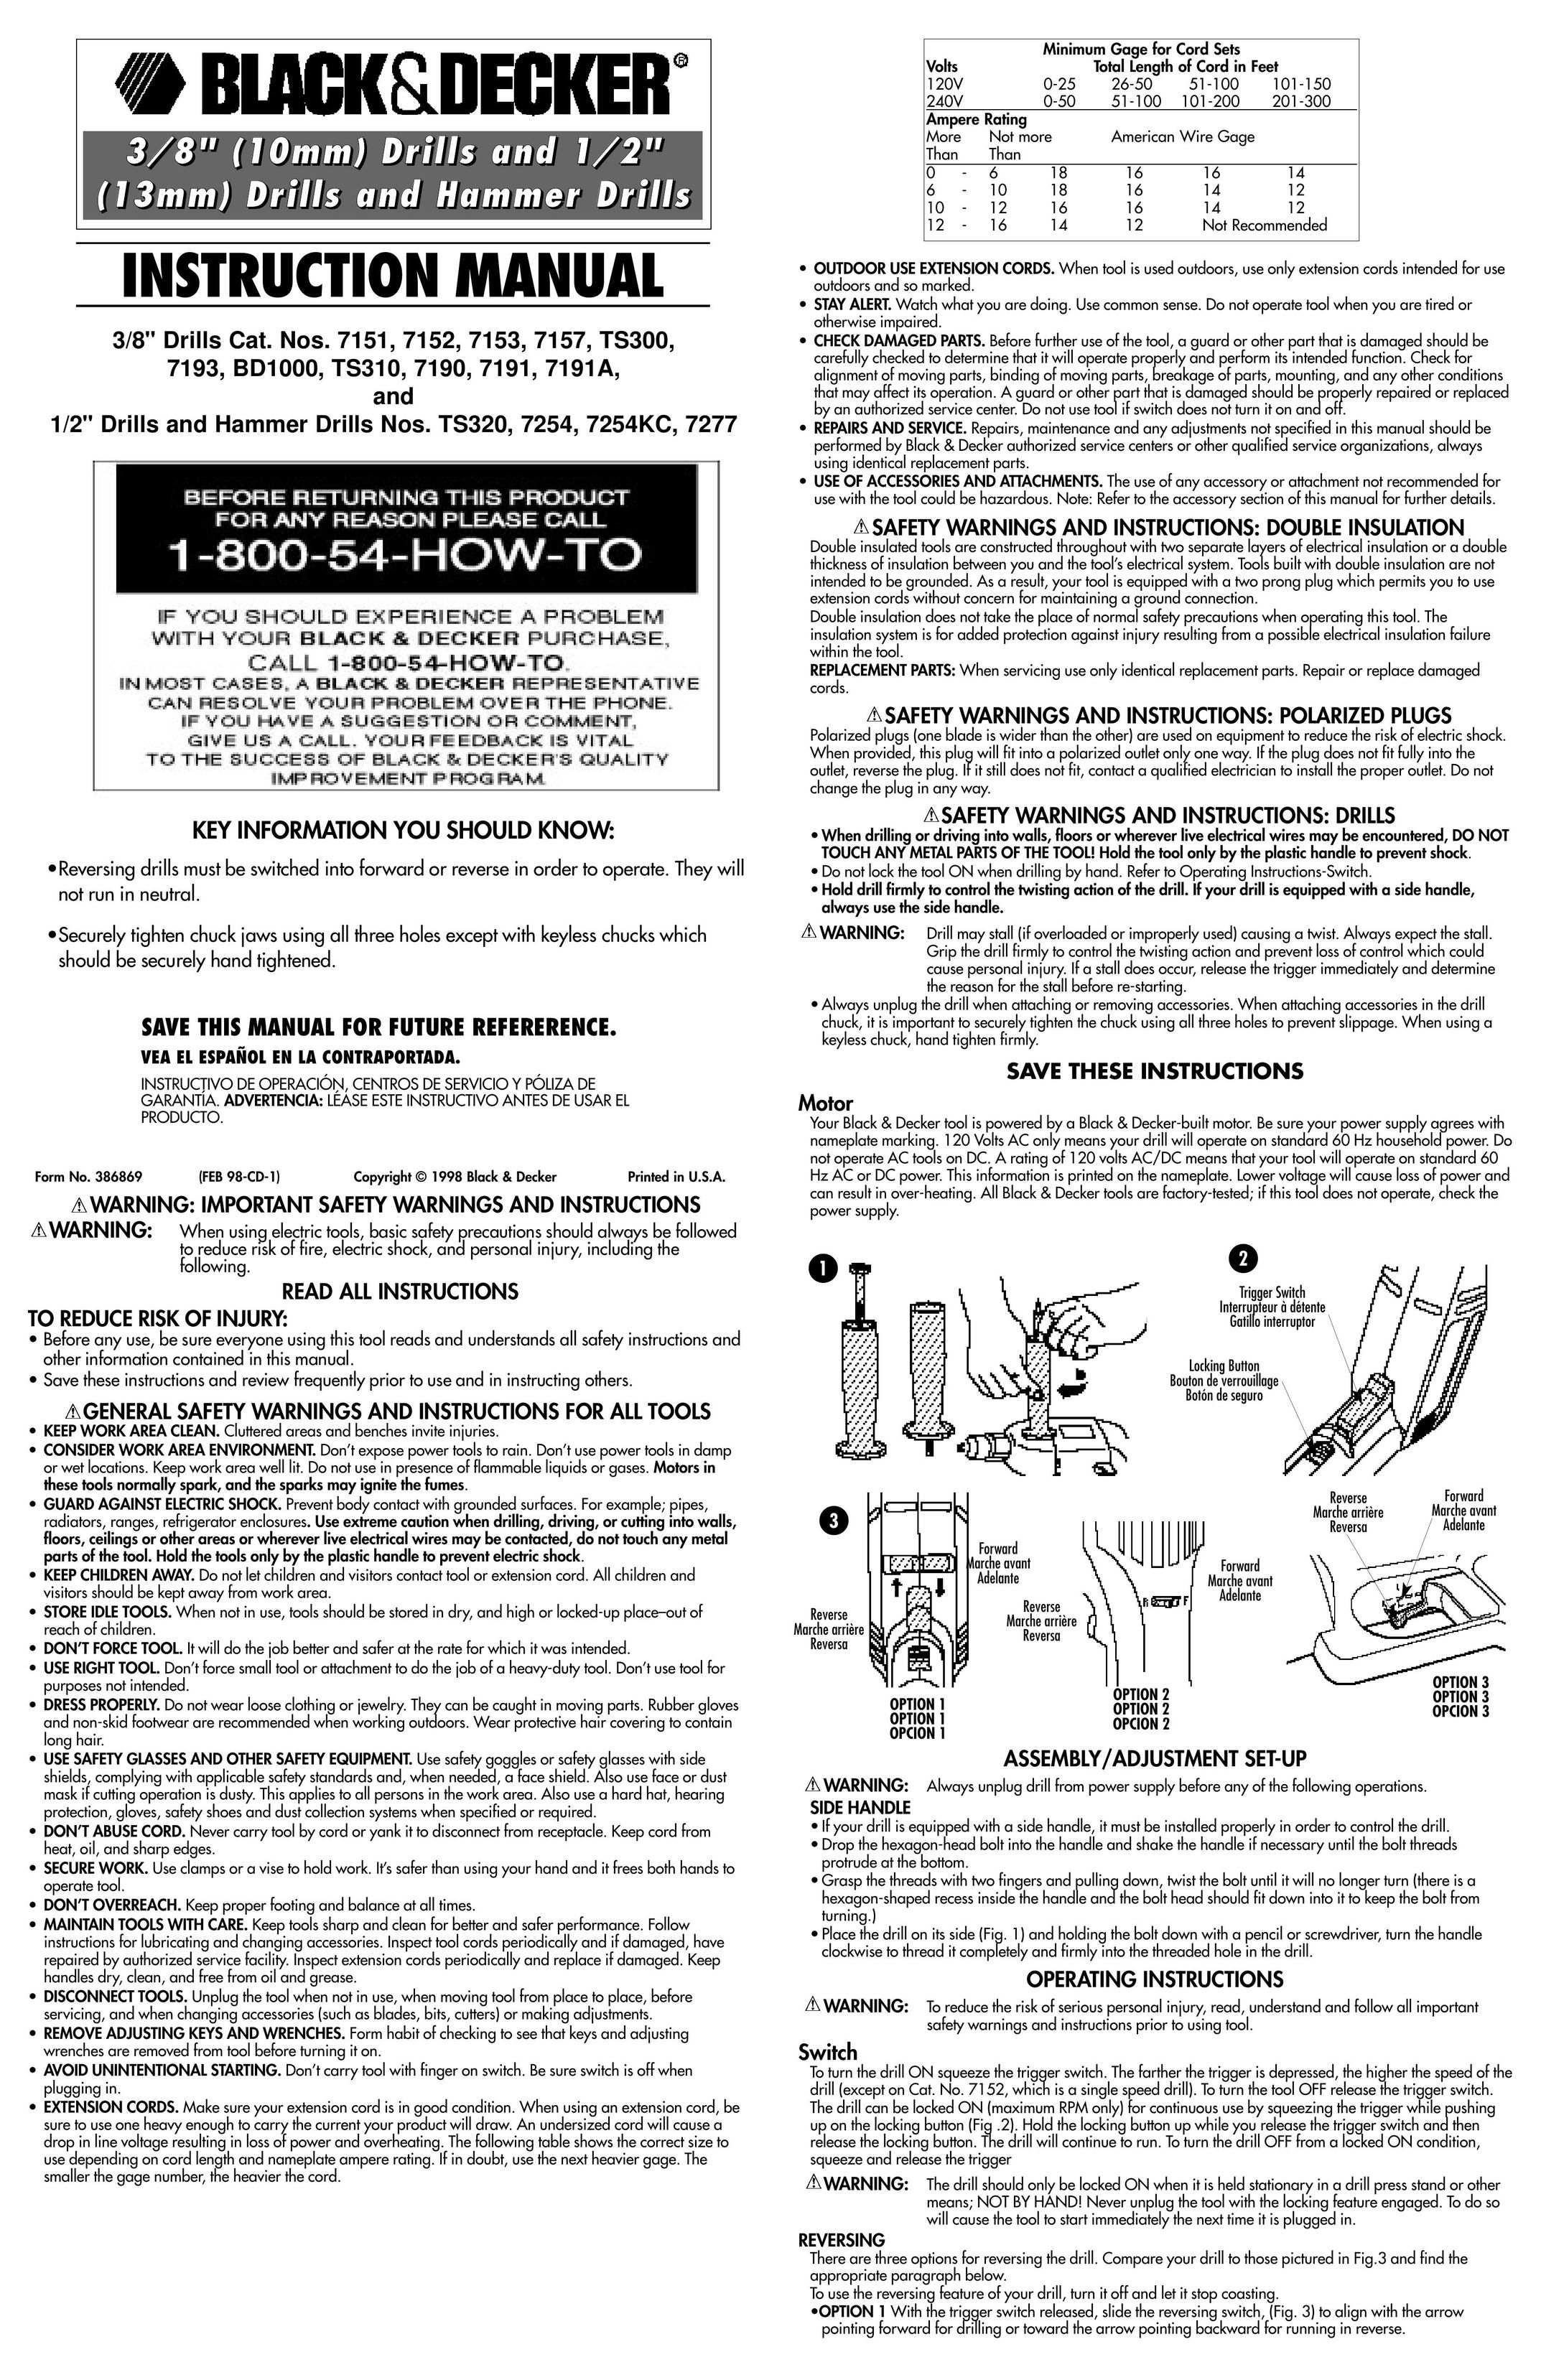 Cisco Systems 3/8" DRILLS CAT. NOS. TS310 Drill User Manual